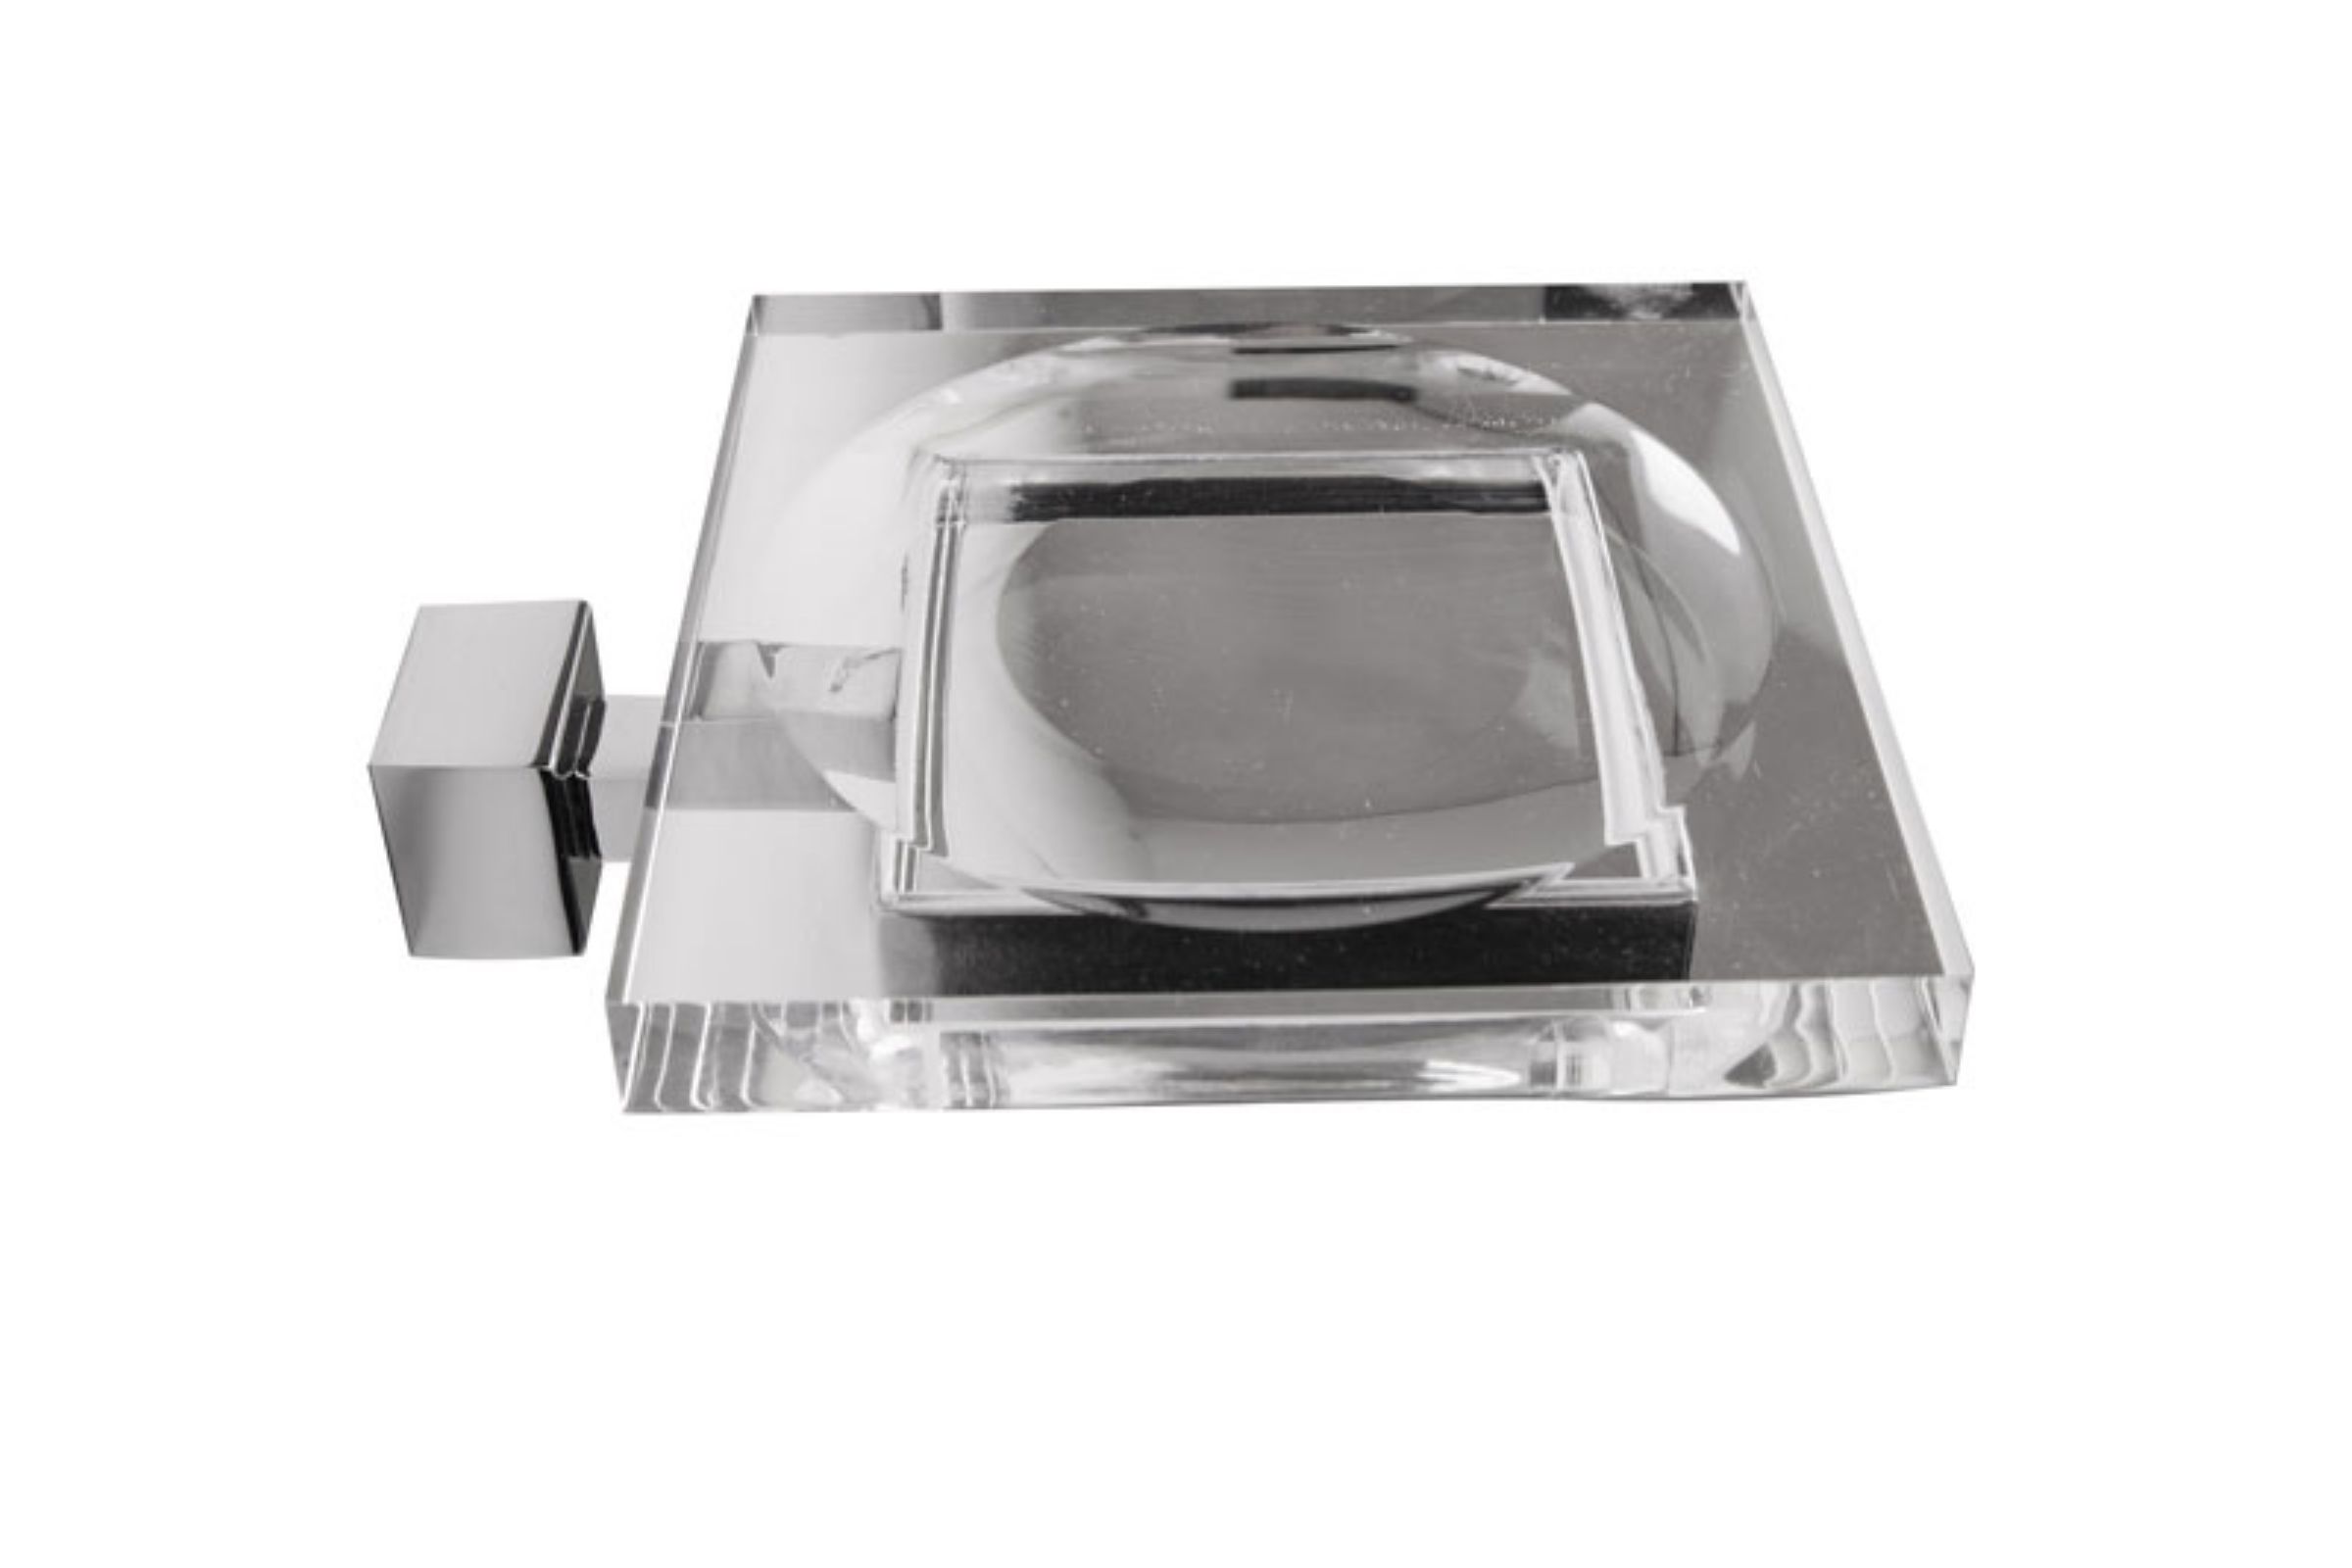 porta sapone in plexiglass soap dish in plexiglass cm. 14,5x11x4